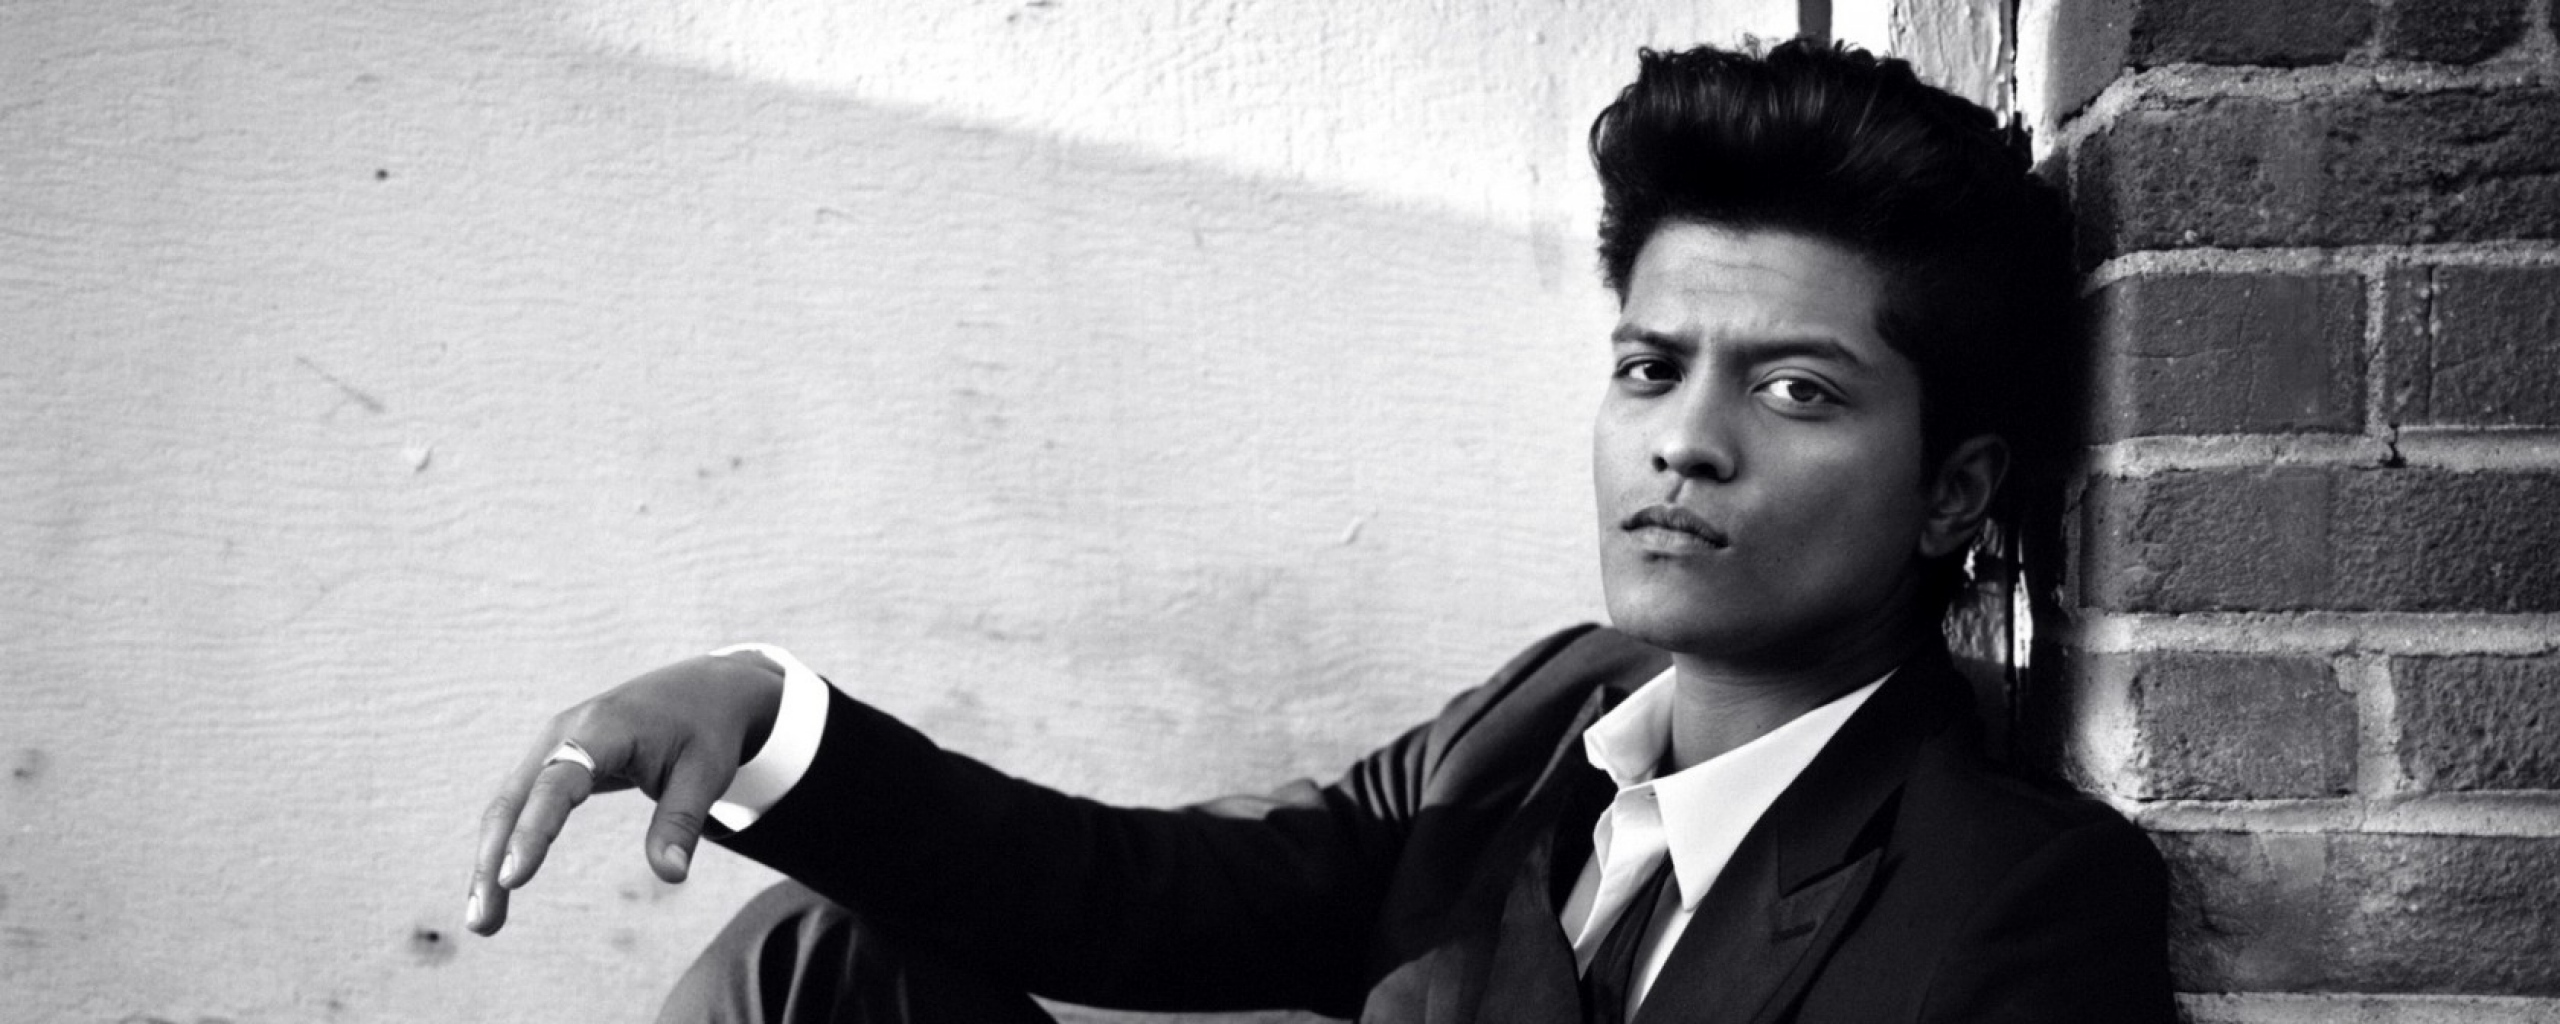 Wallpaper Bruno Mars Singer Musician Dual Monitor